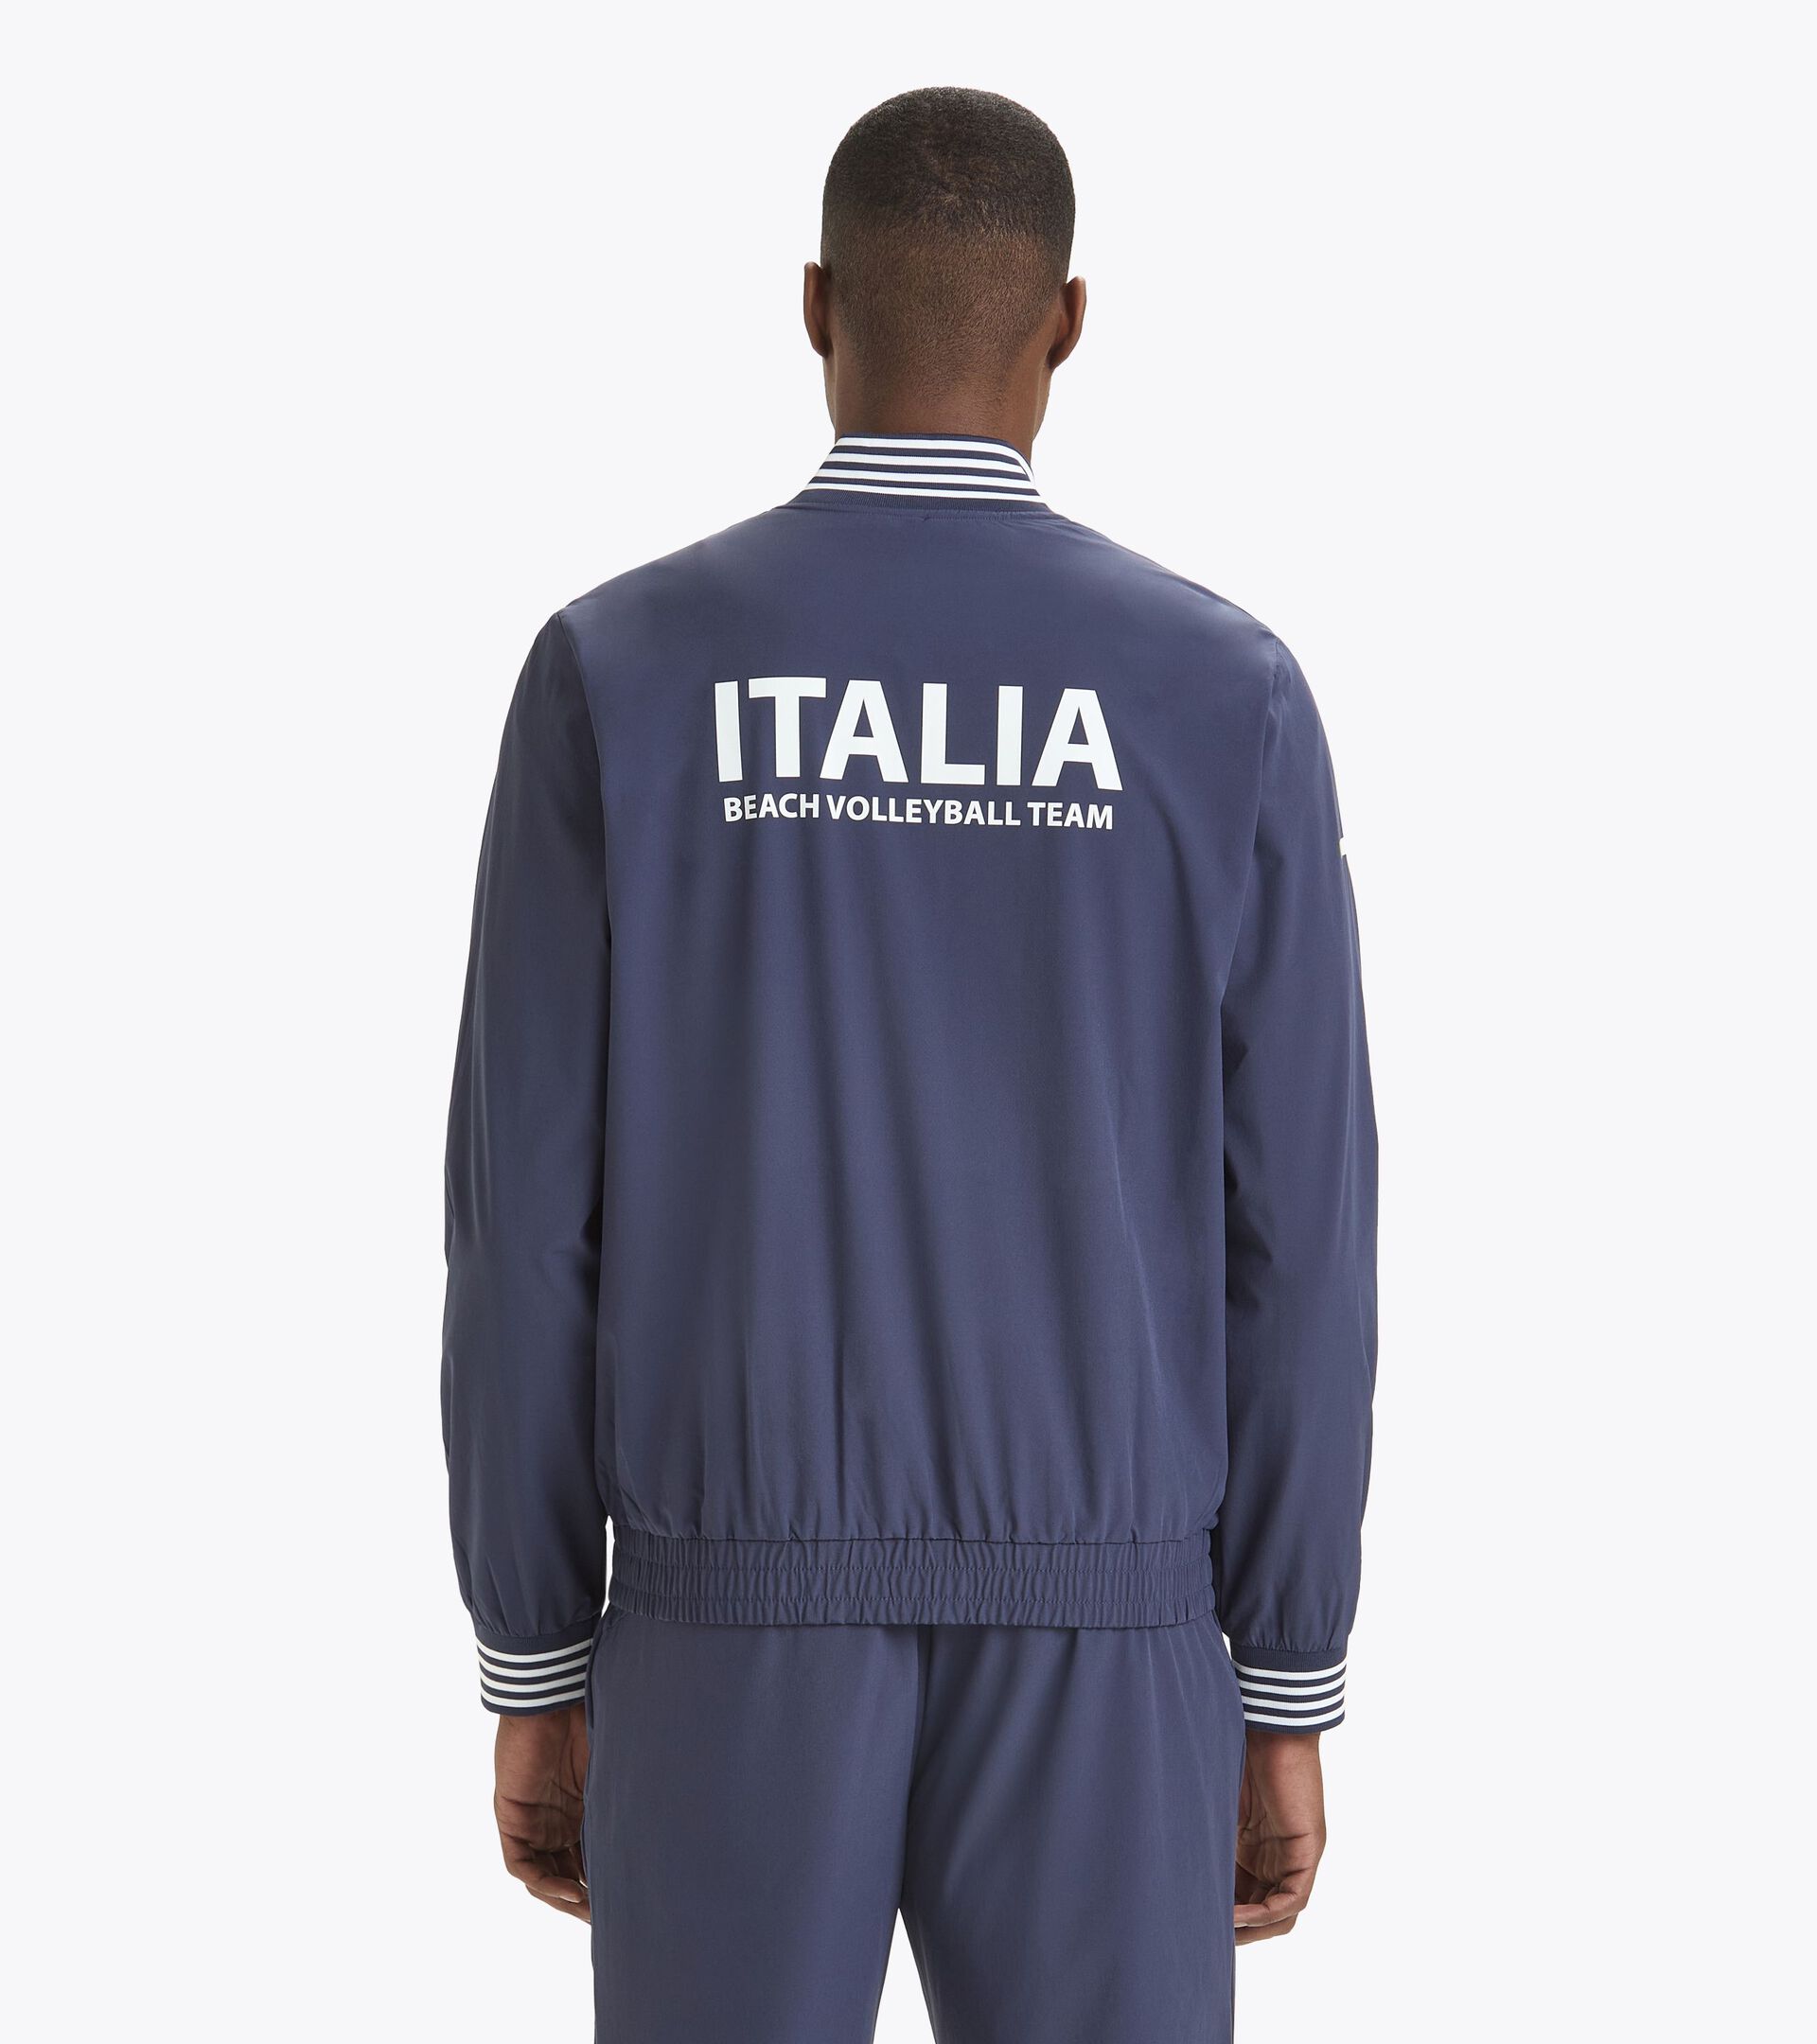 Representative hoodie - Italy Men’s National beach Volleyball Team TOP RAPPRESENTANZA BV24 ITALIA CLASSIC NAVY - Diadora